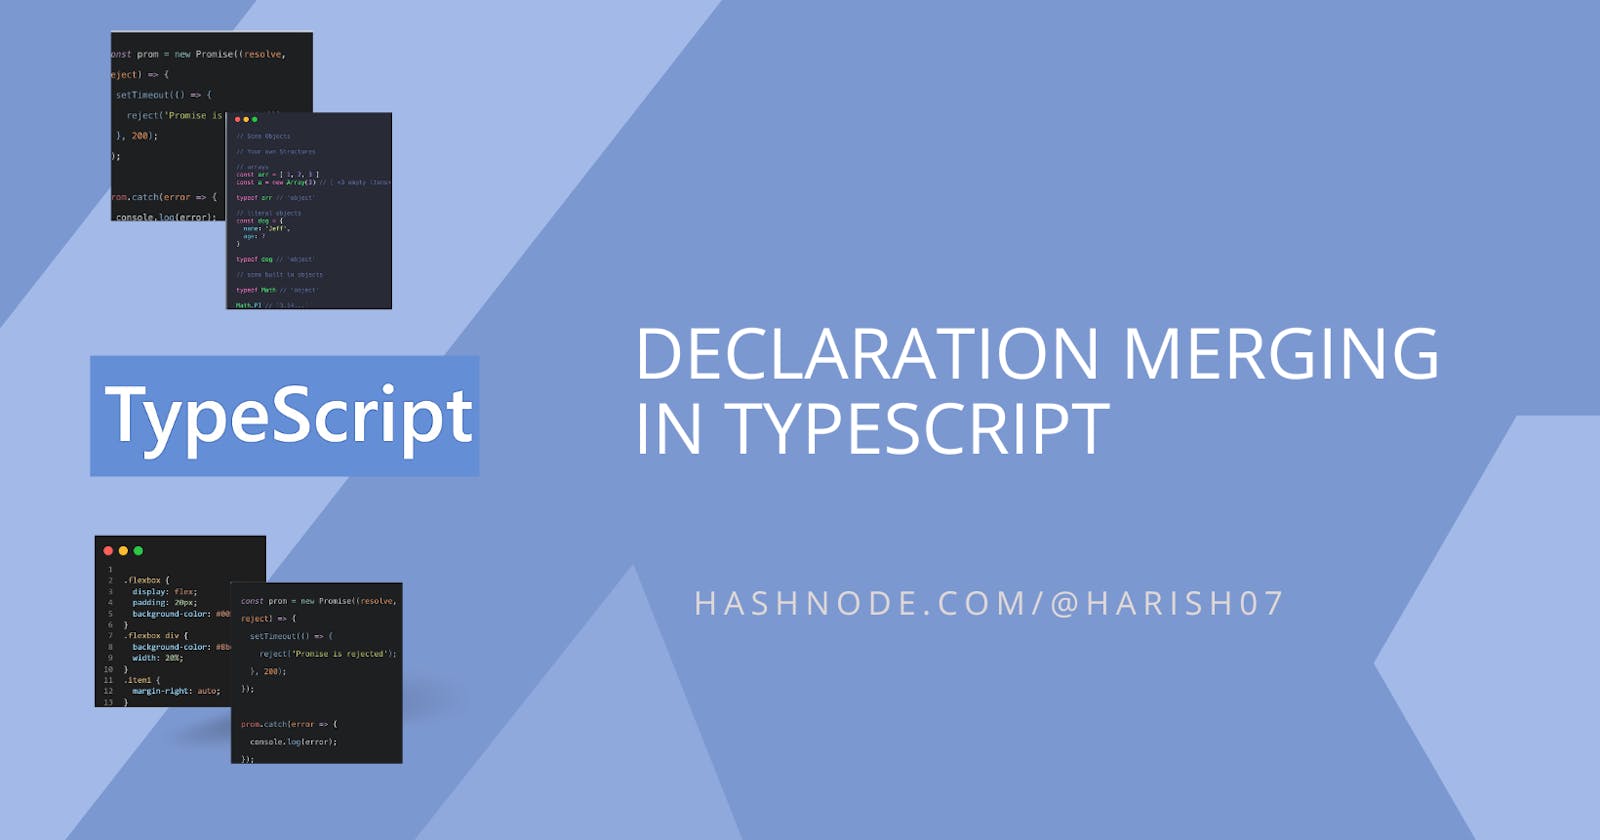 Declaration Merging in Typescript